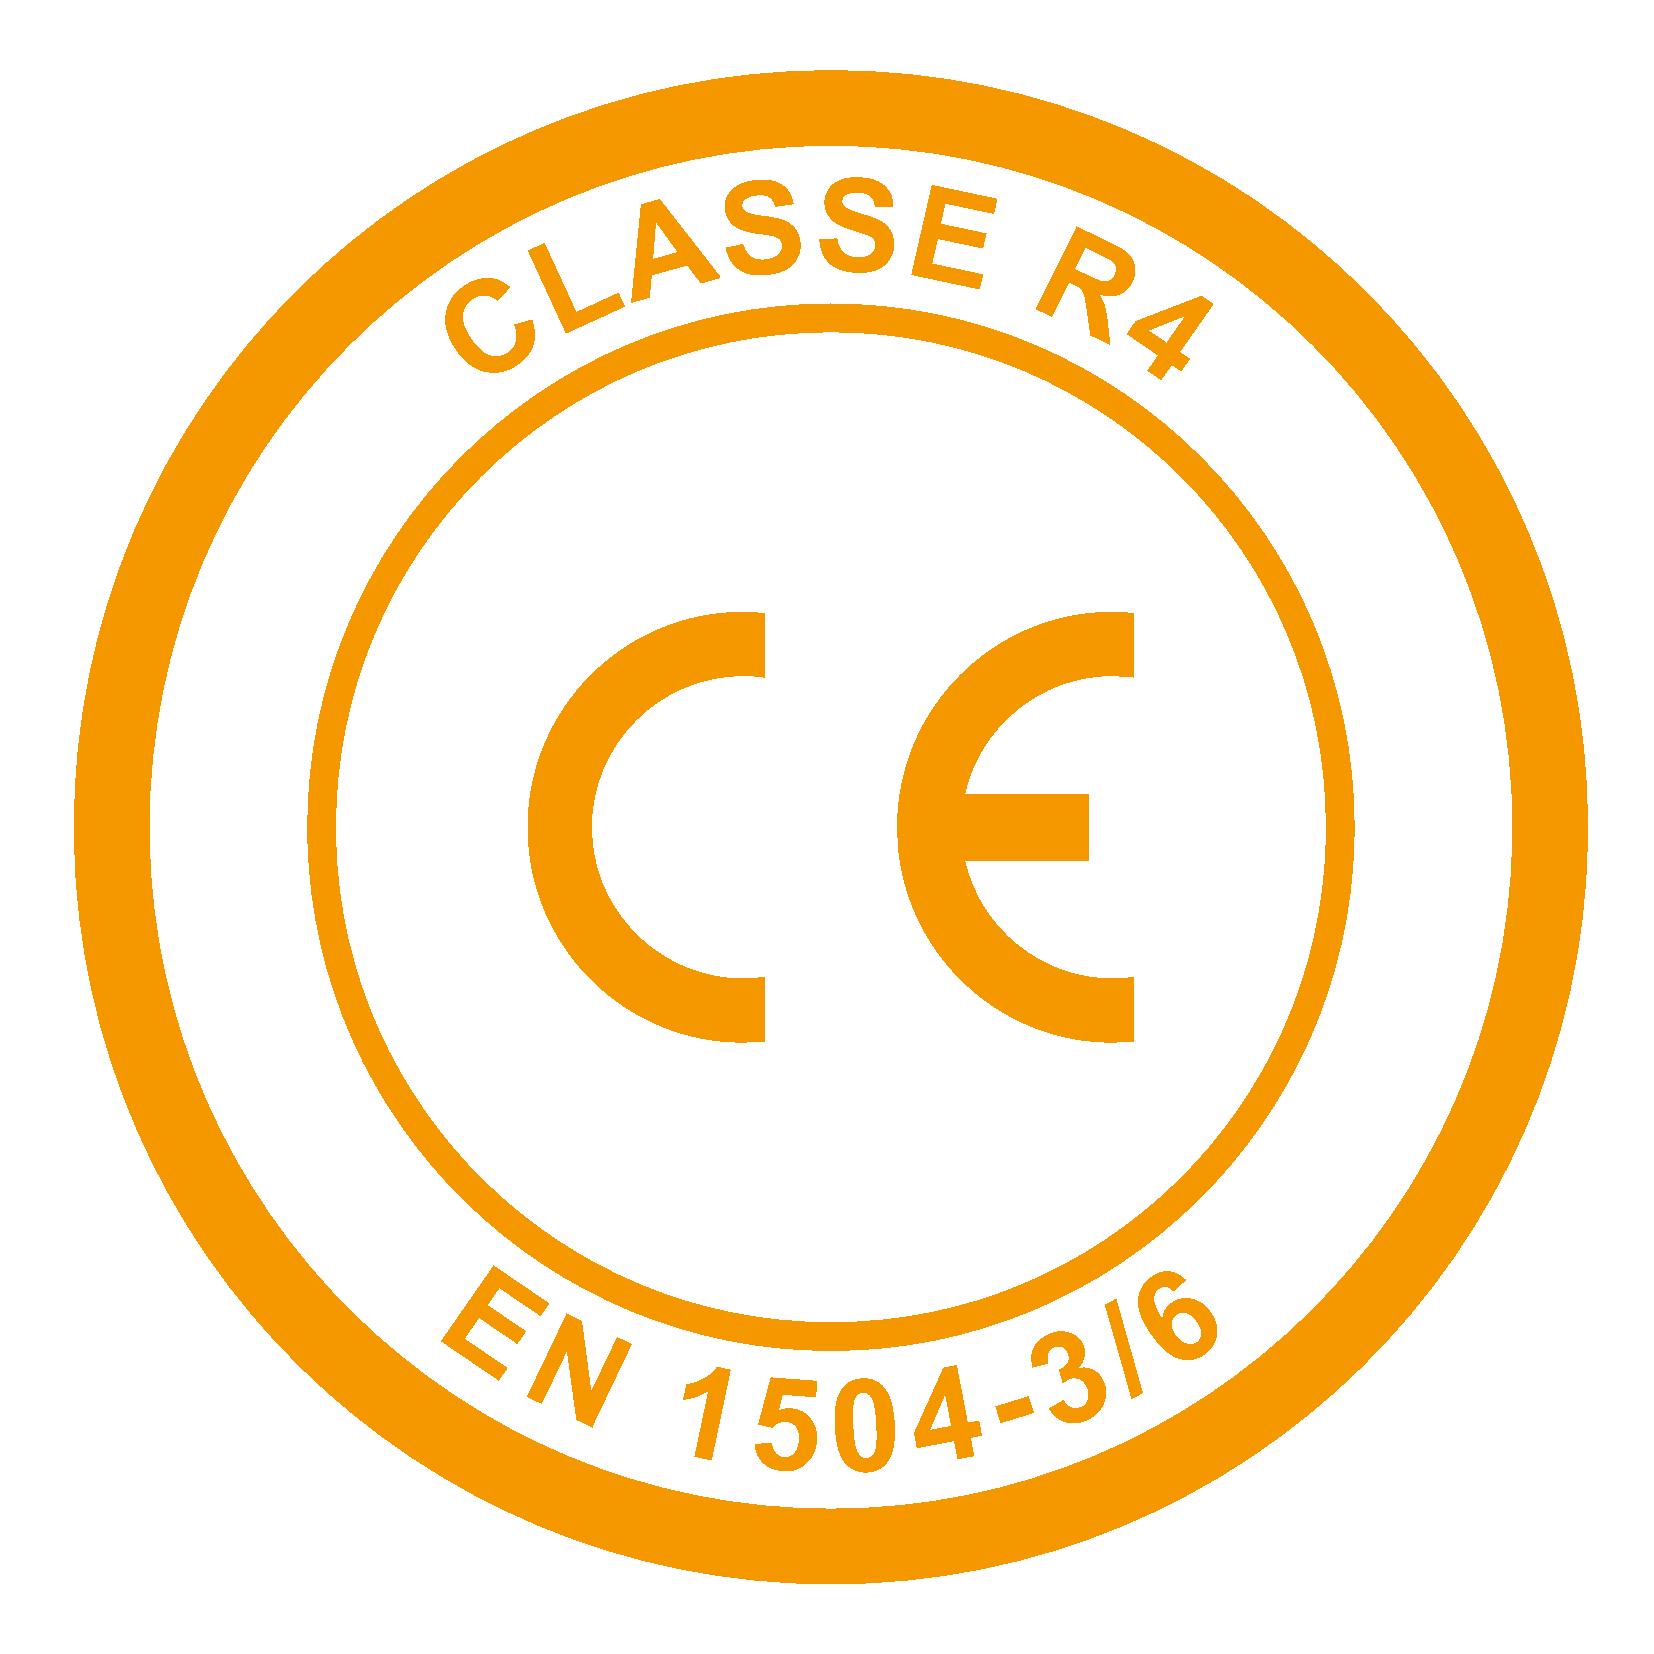 MasterFlow 928 - Classe R4 (EN 1504-3/6)